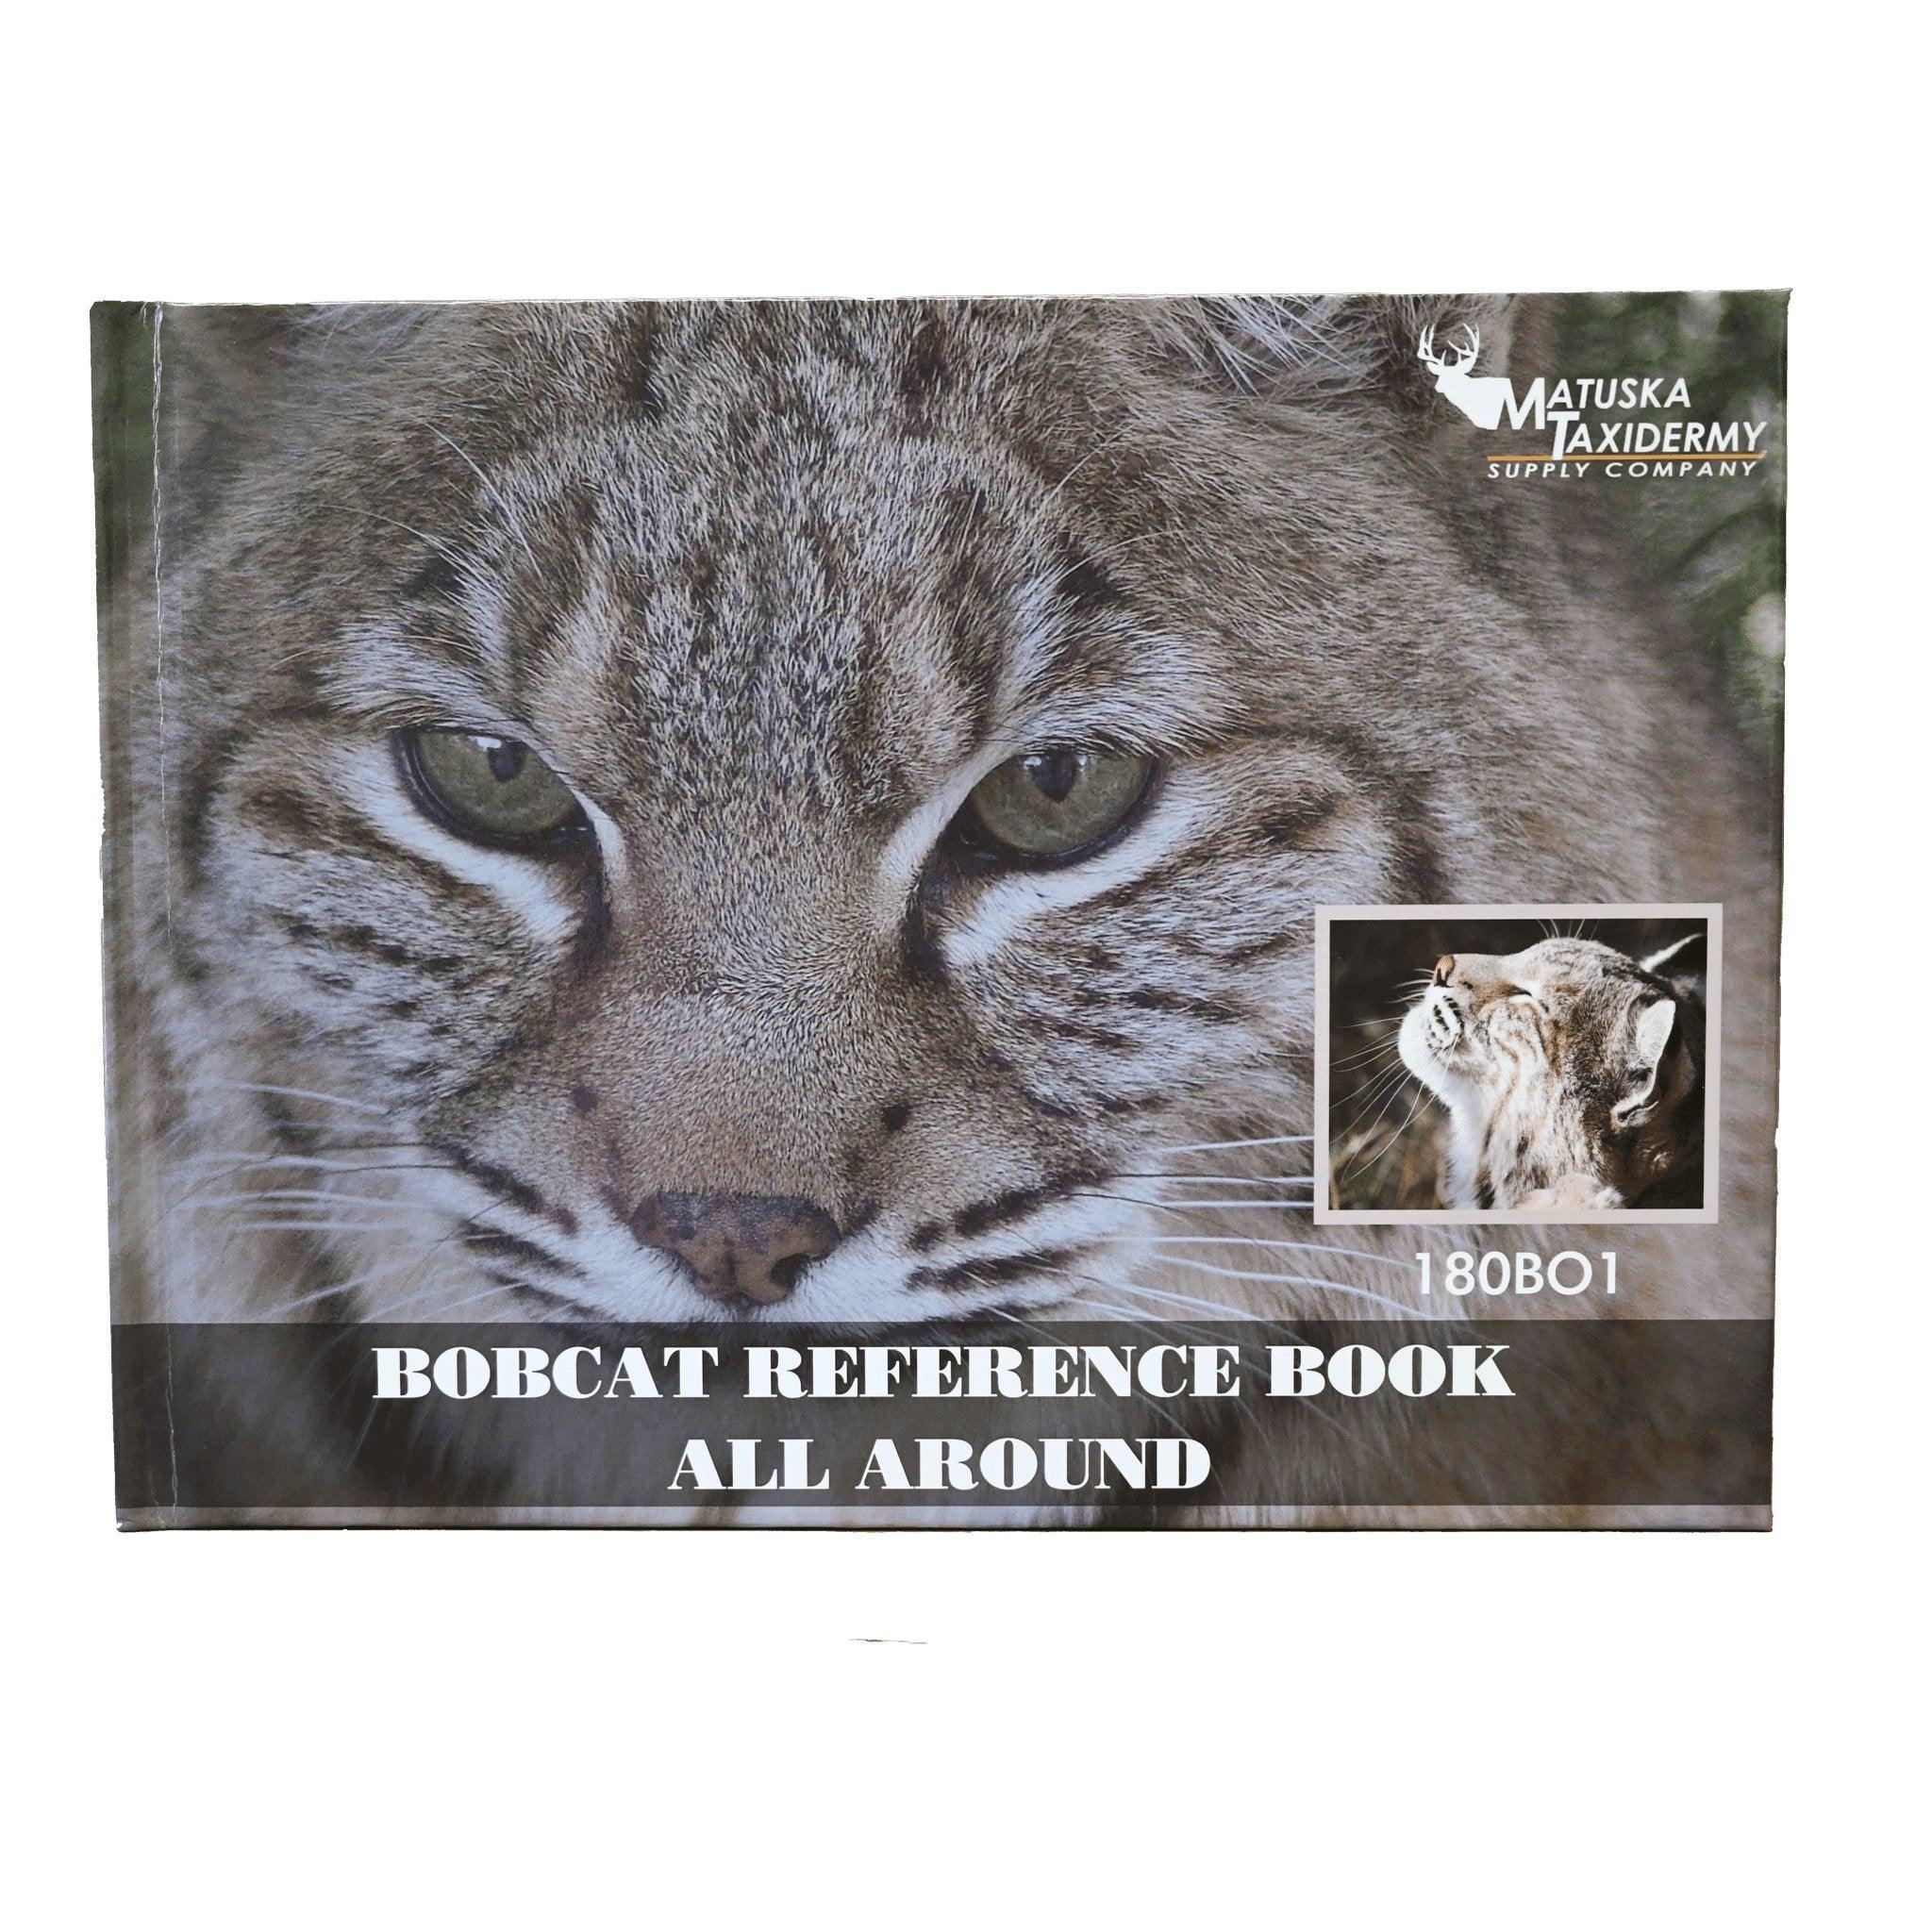 Bobcat Reference Book by Phil Wilson - Matuska Taxidermy Supply Company